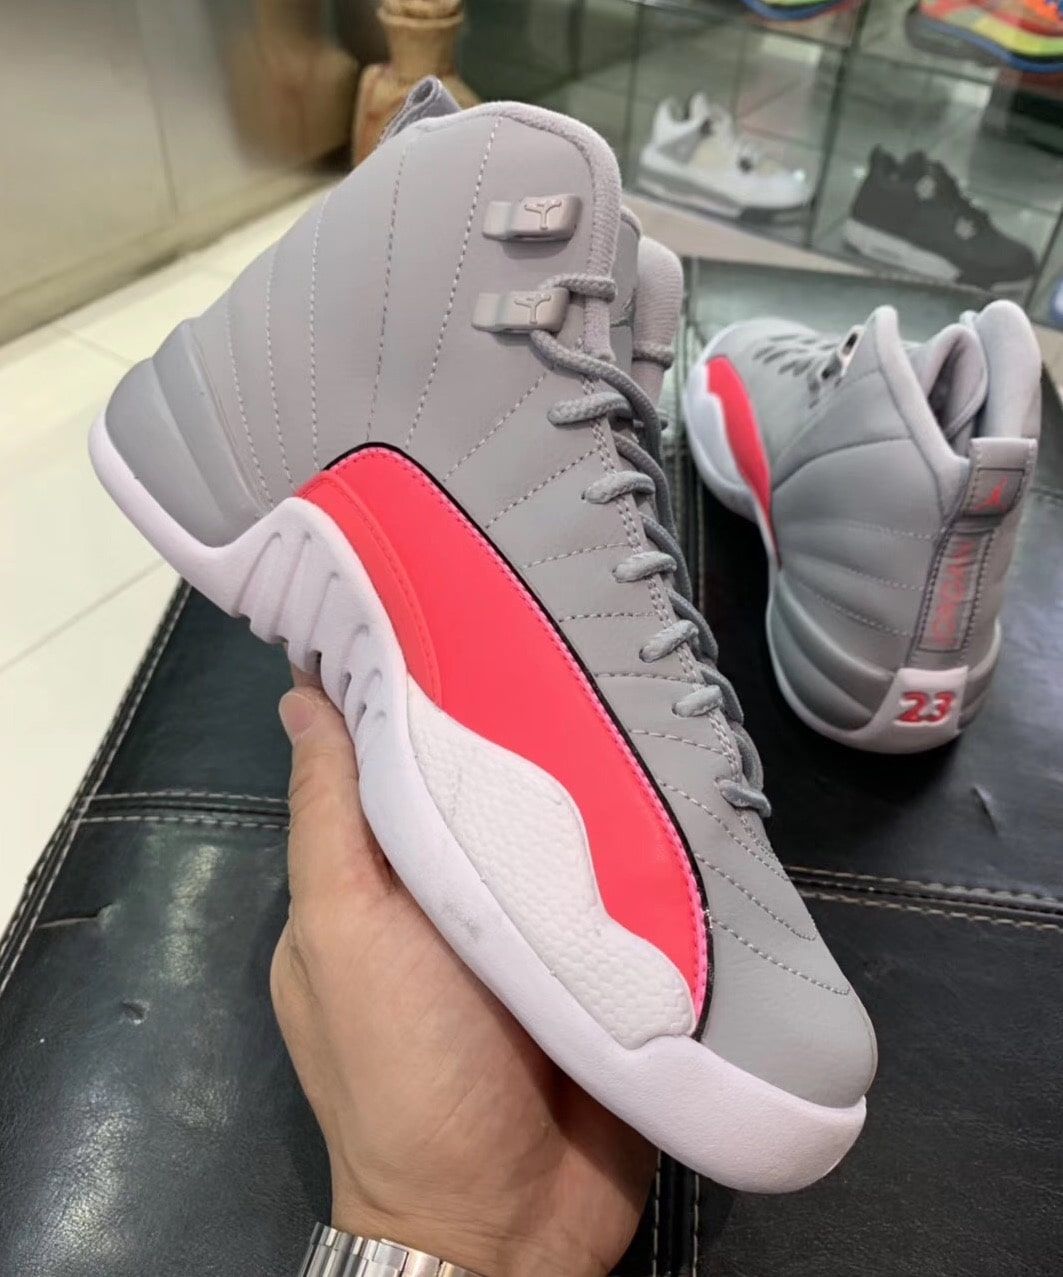 pink and grey jordans 2019